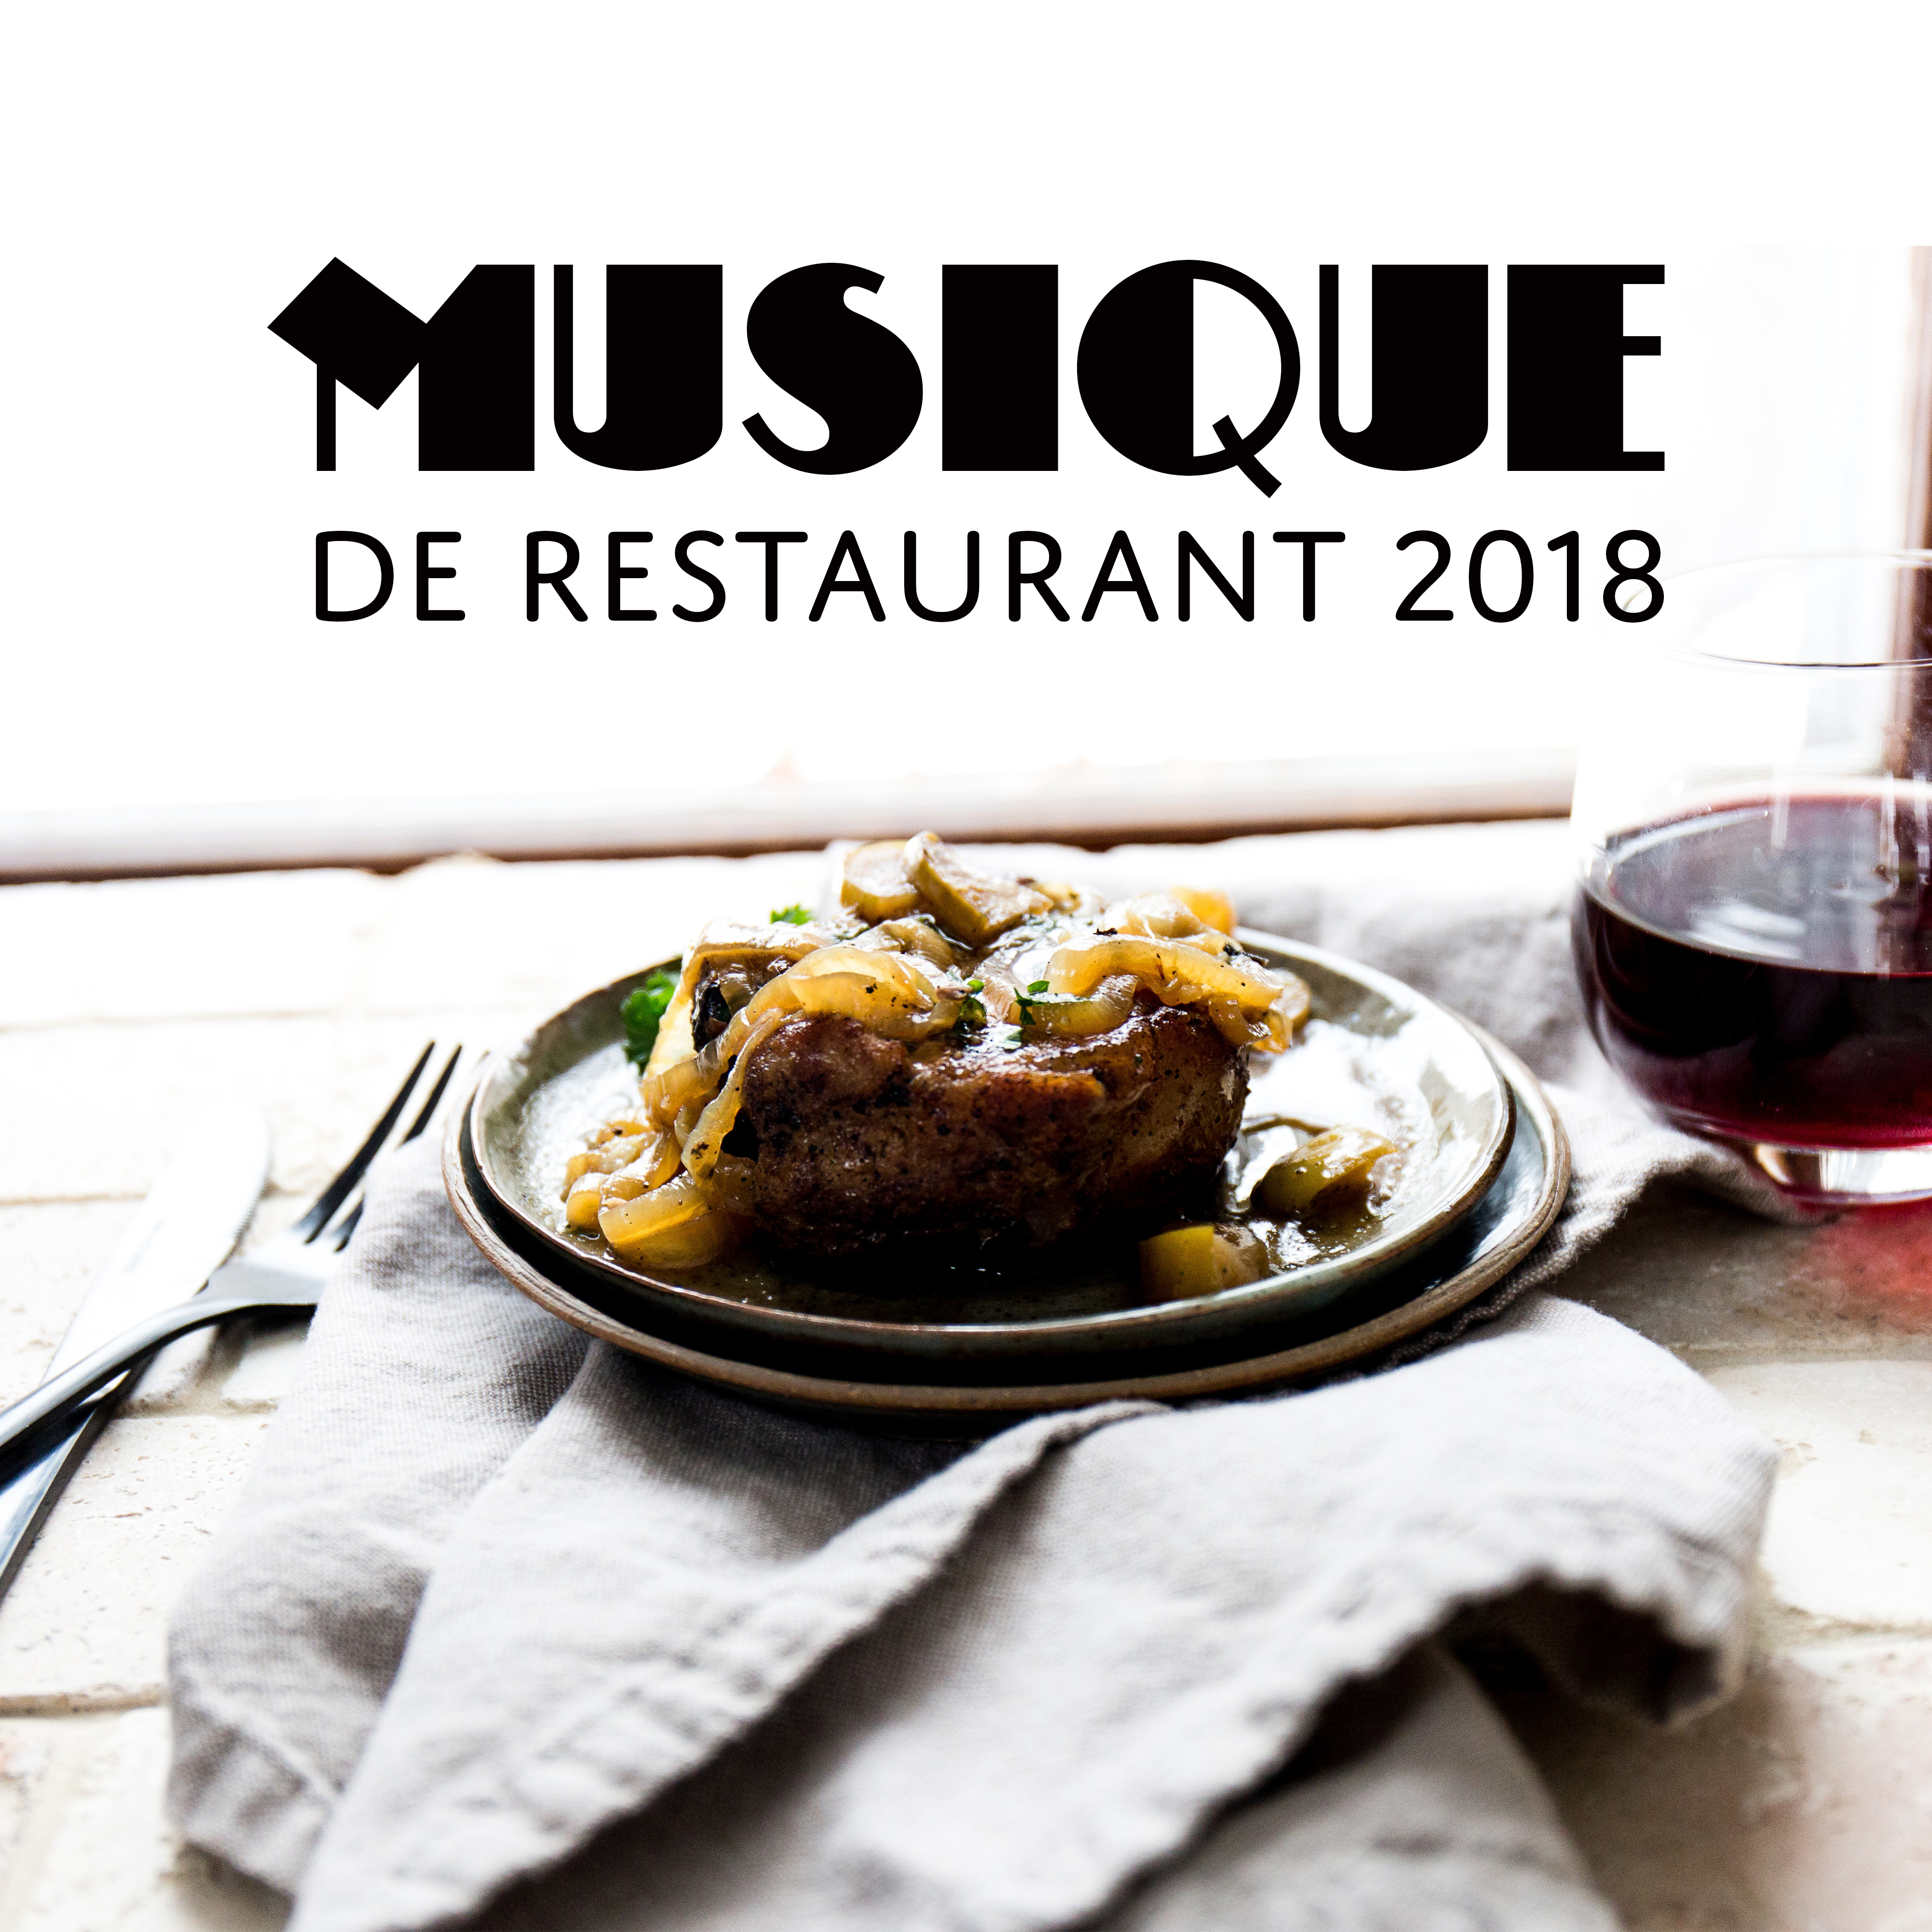 Musique de restaurant 2018